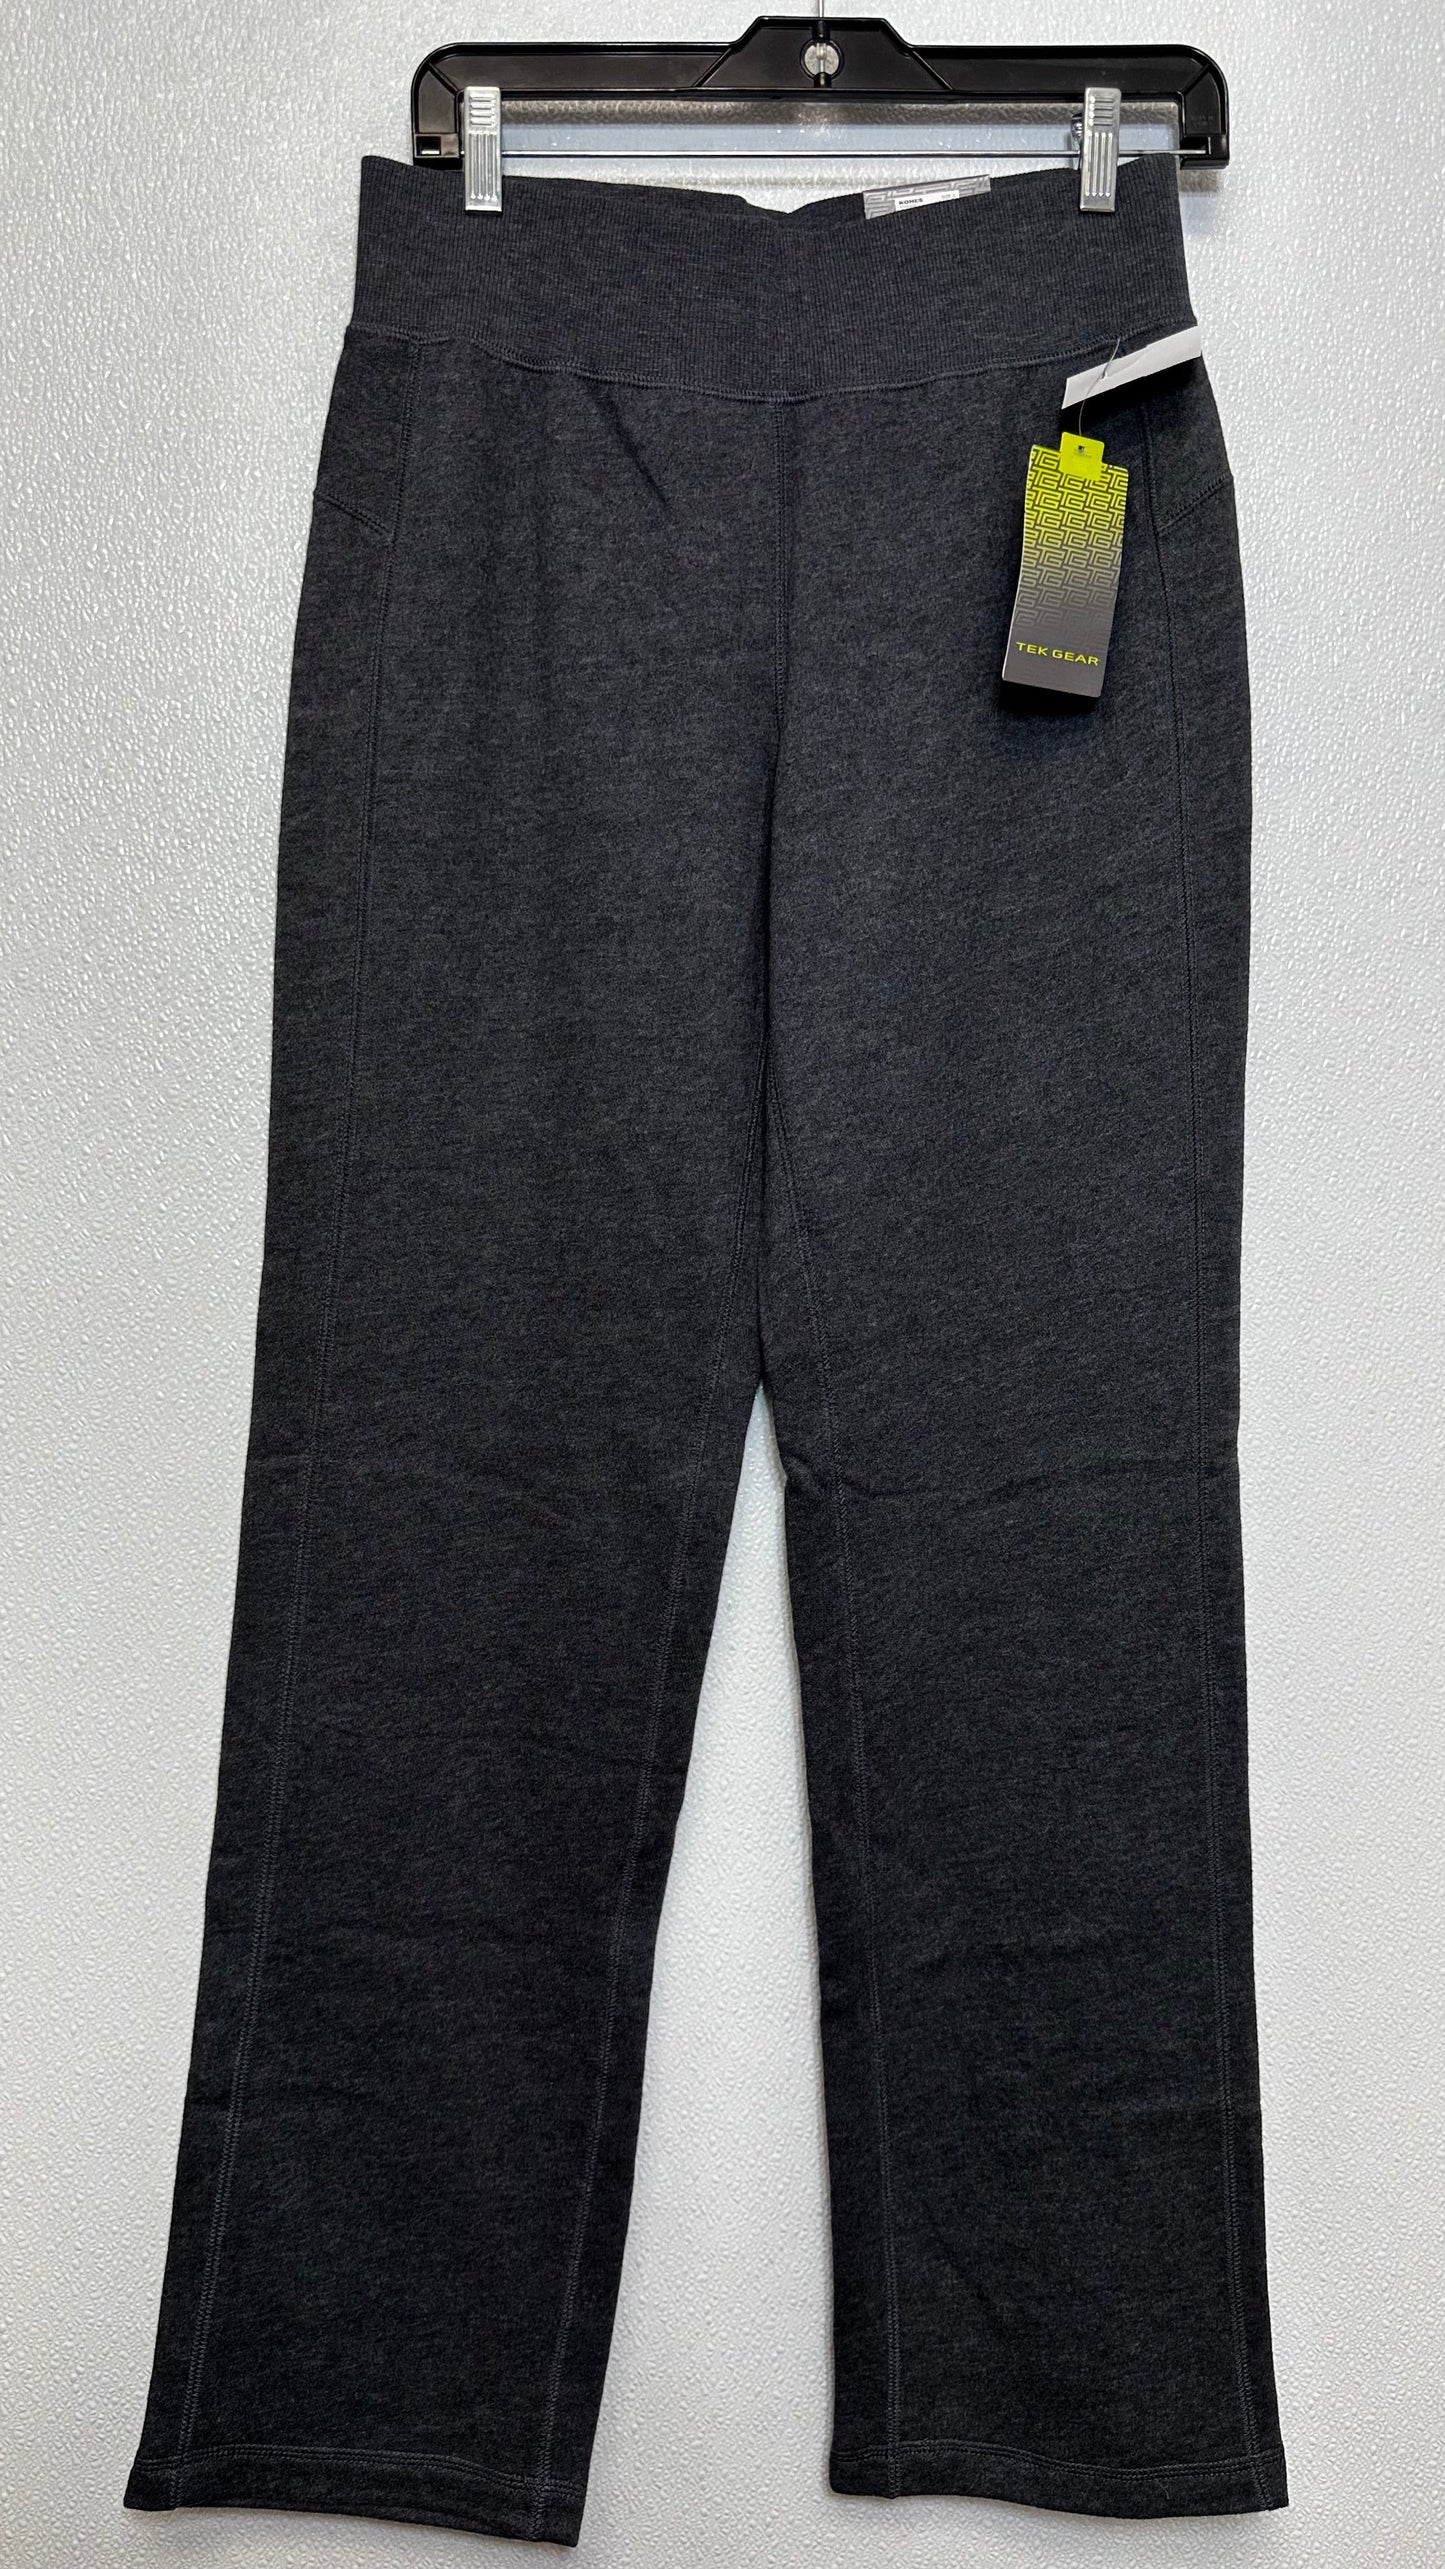 Grey Athletic Pants Tek Gear, Size S